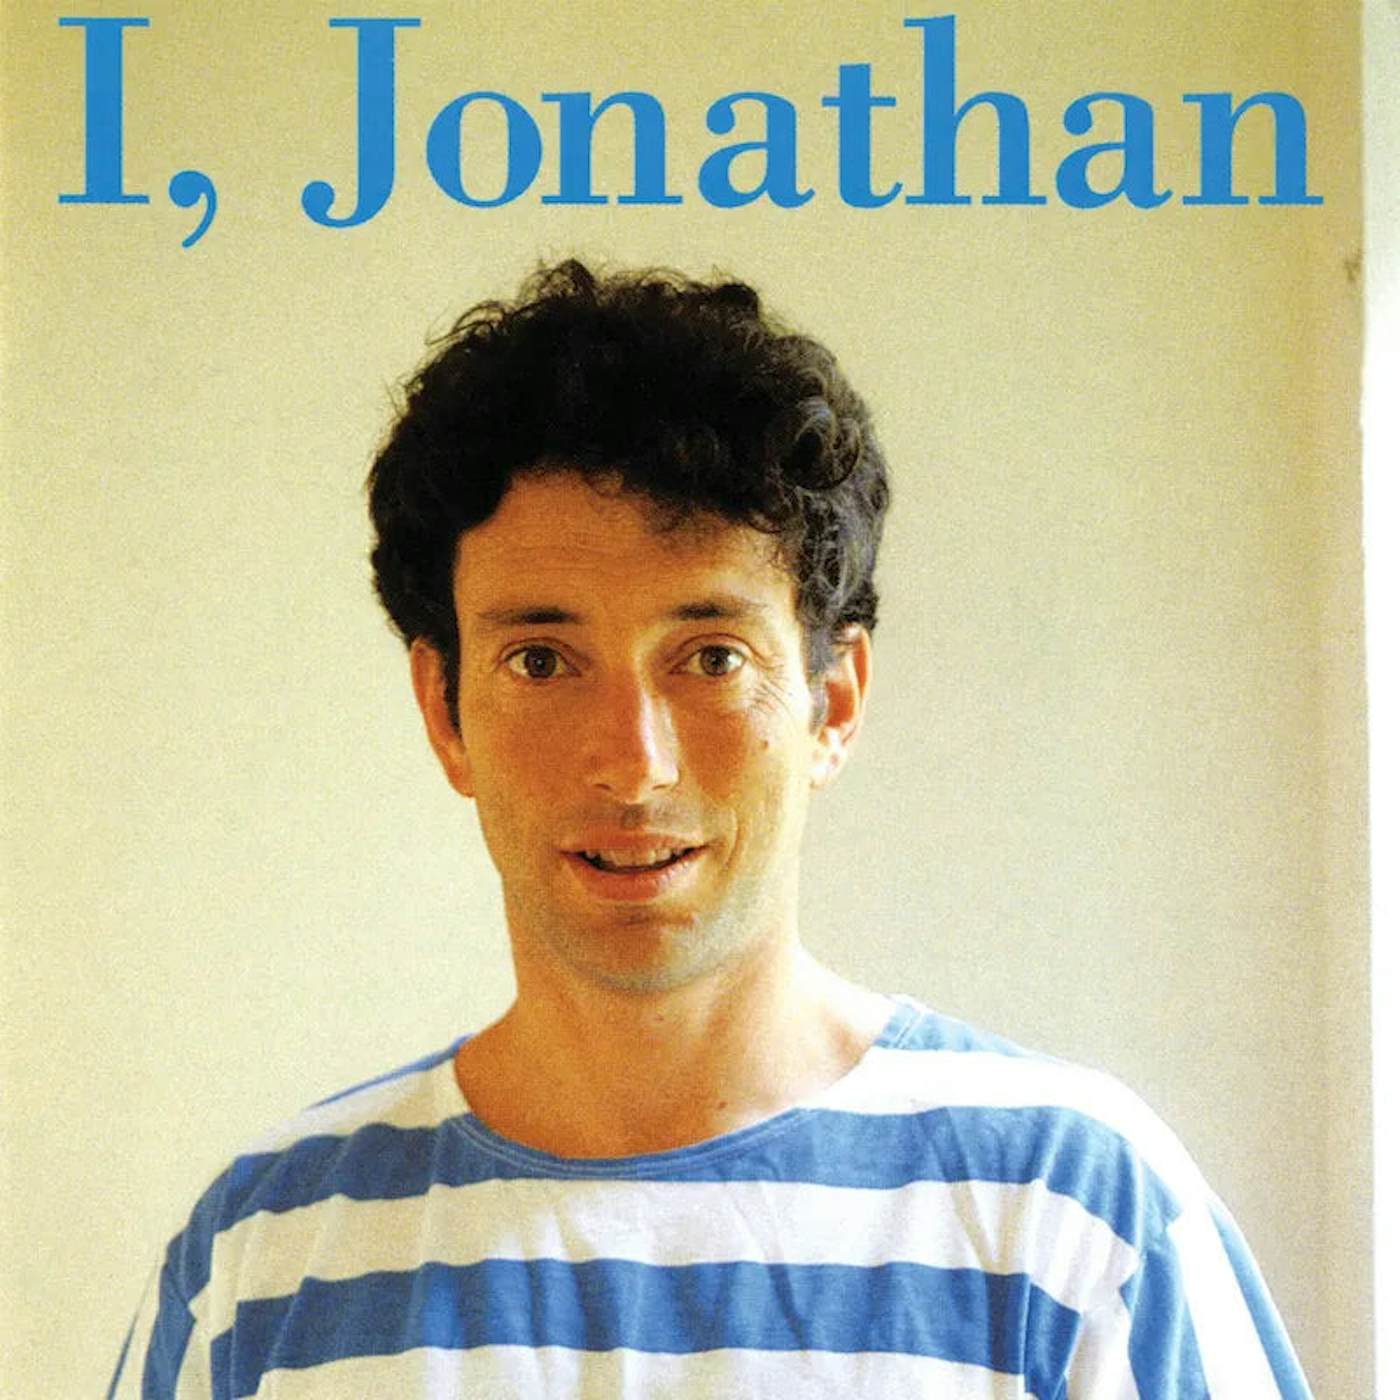 Jonathan Richman - I Jonathan (Vinyl)